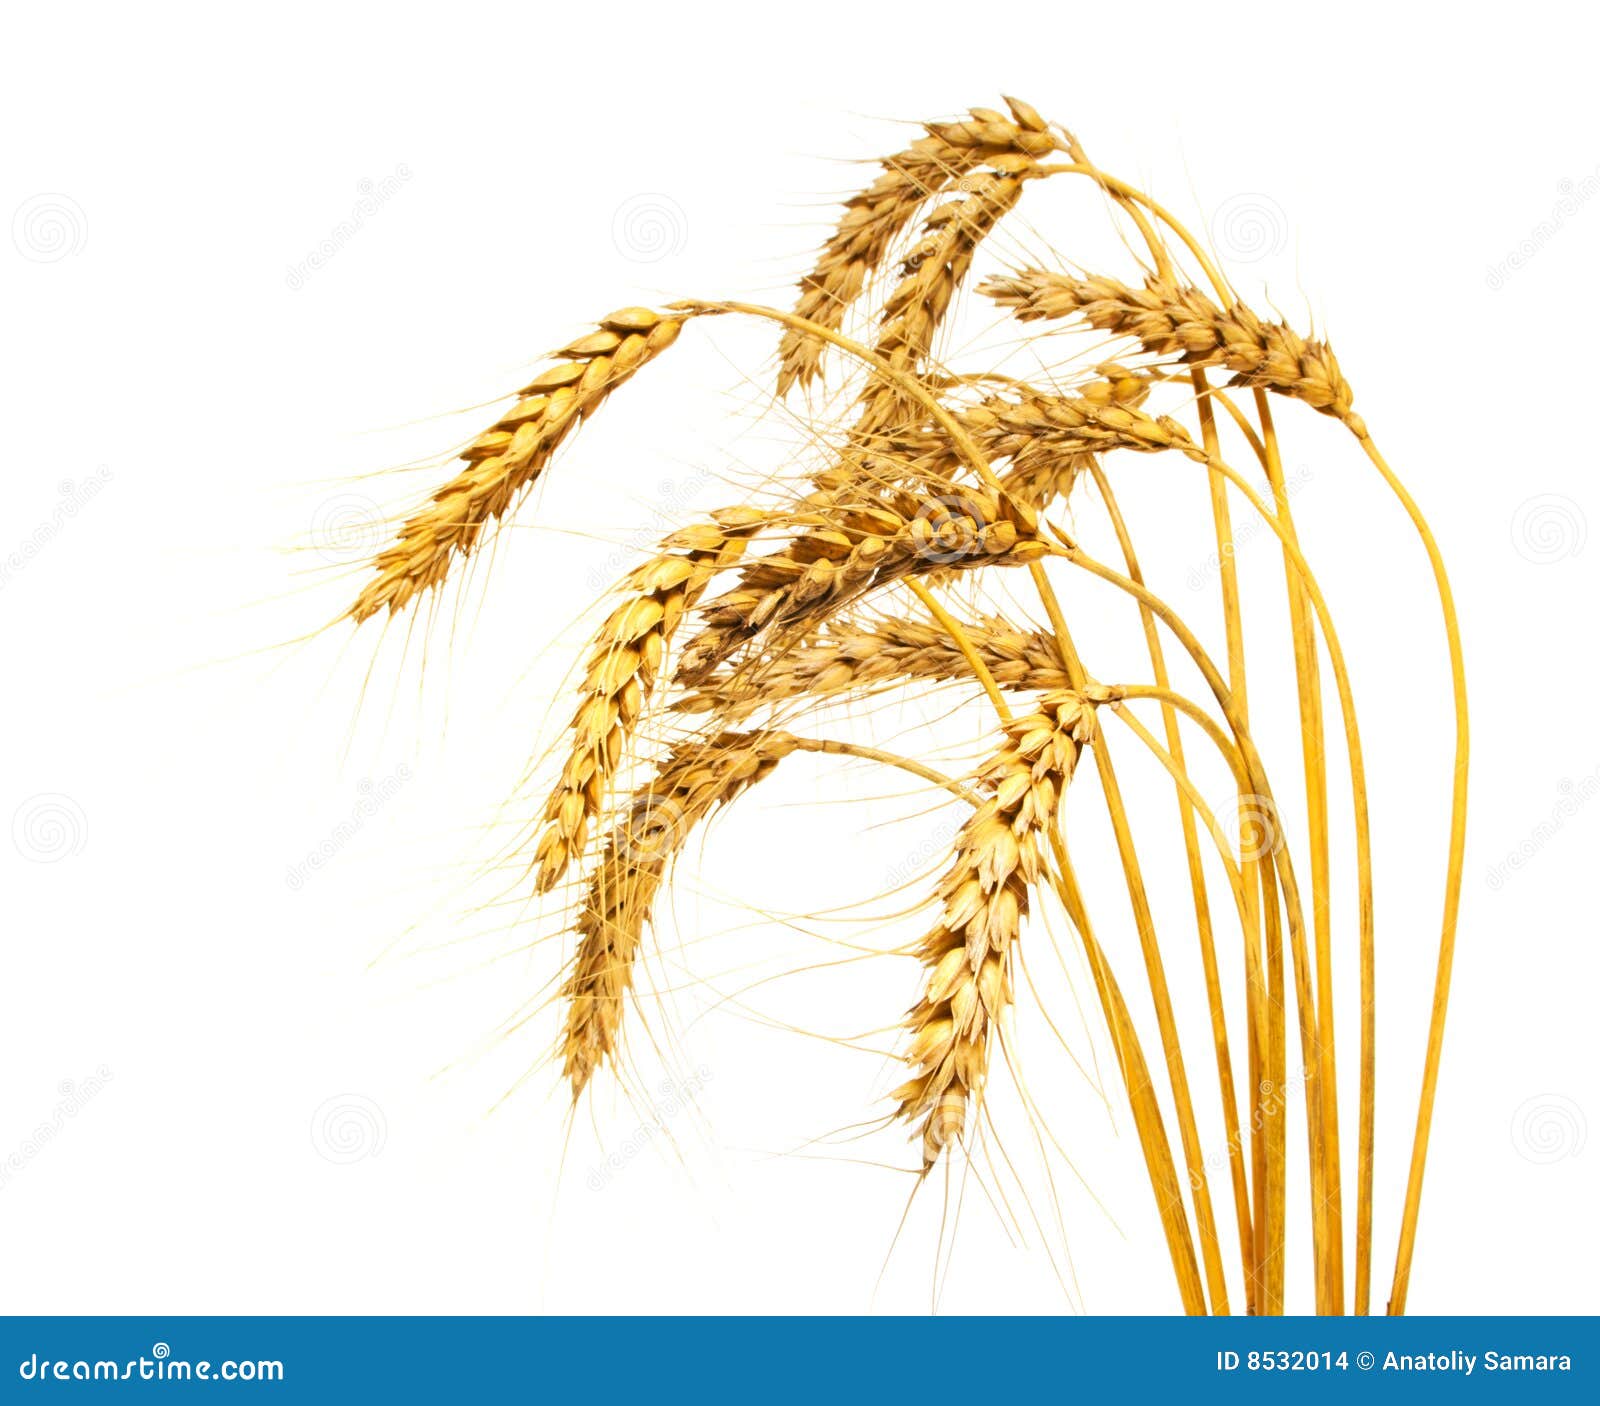 wheat stems, 